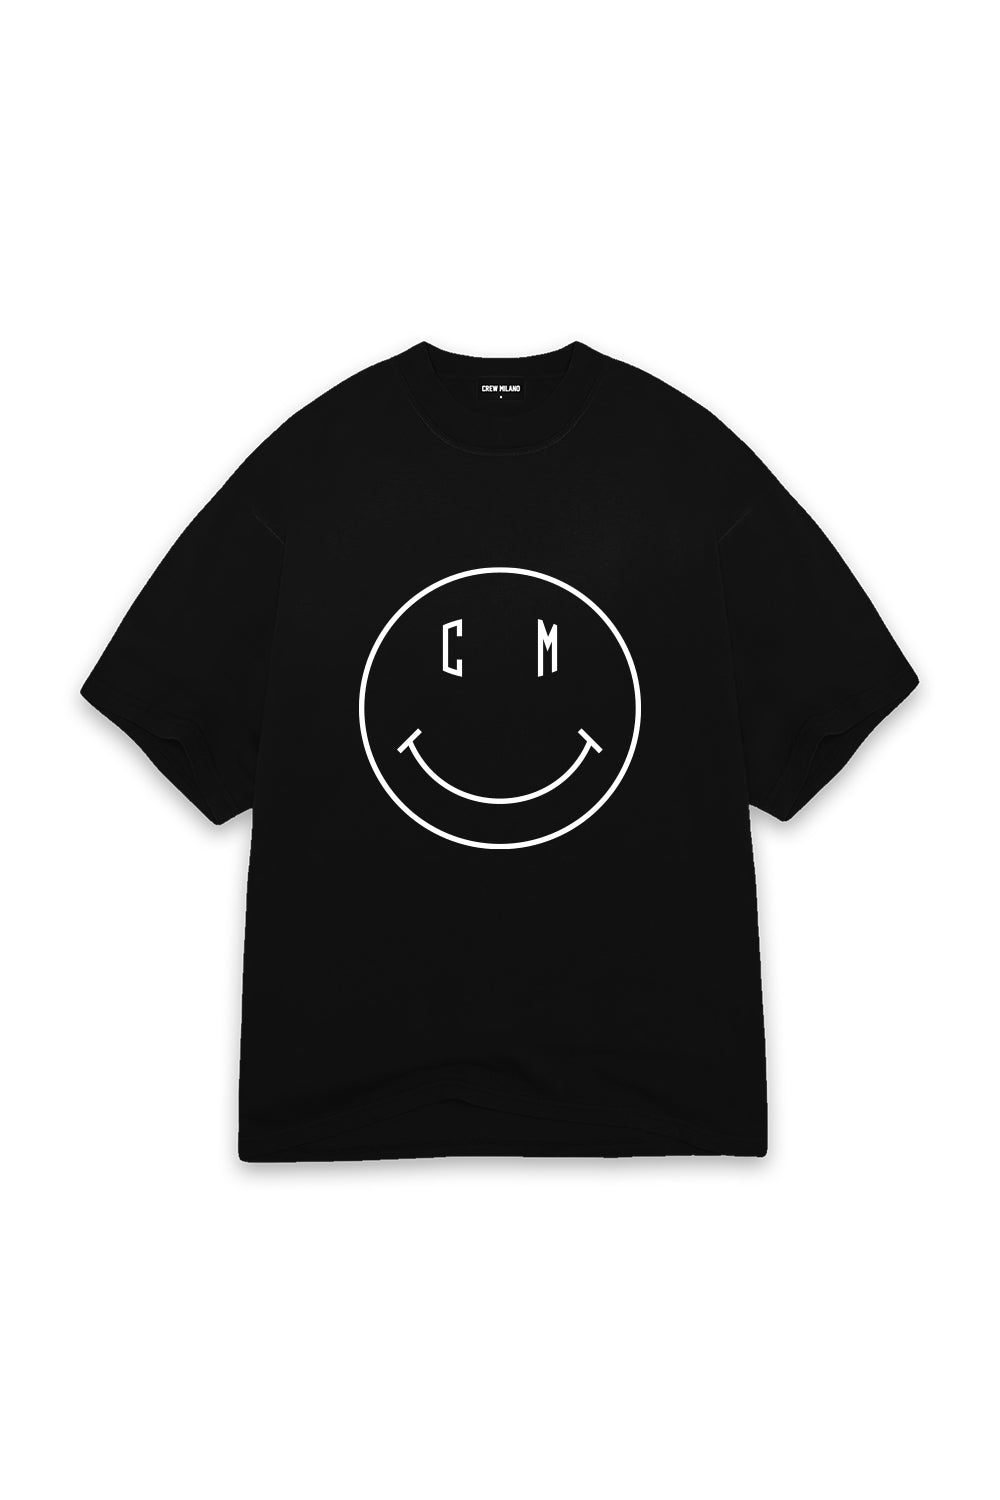 CREW Milano Smile Print Oversized T-Shirt